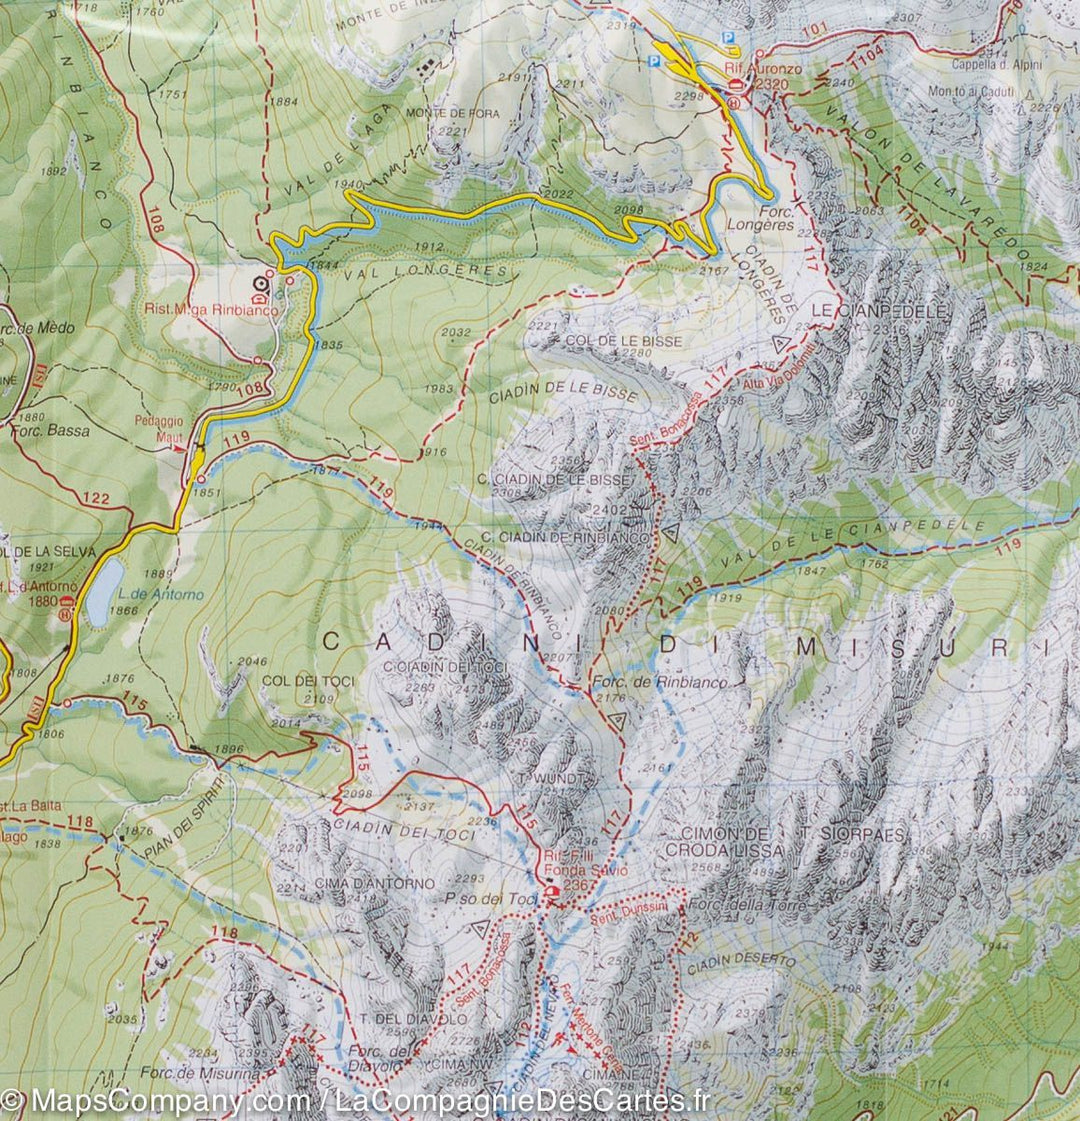 Carte de randonnée n° 10 - Dolomites de Sesto (Dolomites, Italie) | Tabacco carte pliée Tabacco 